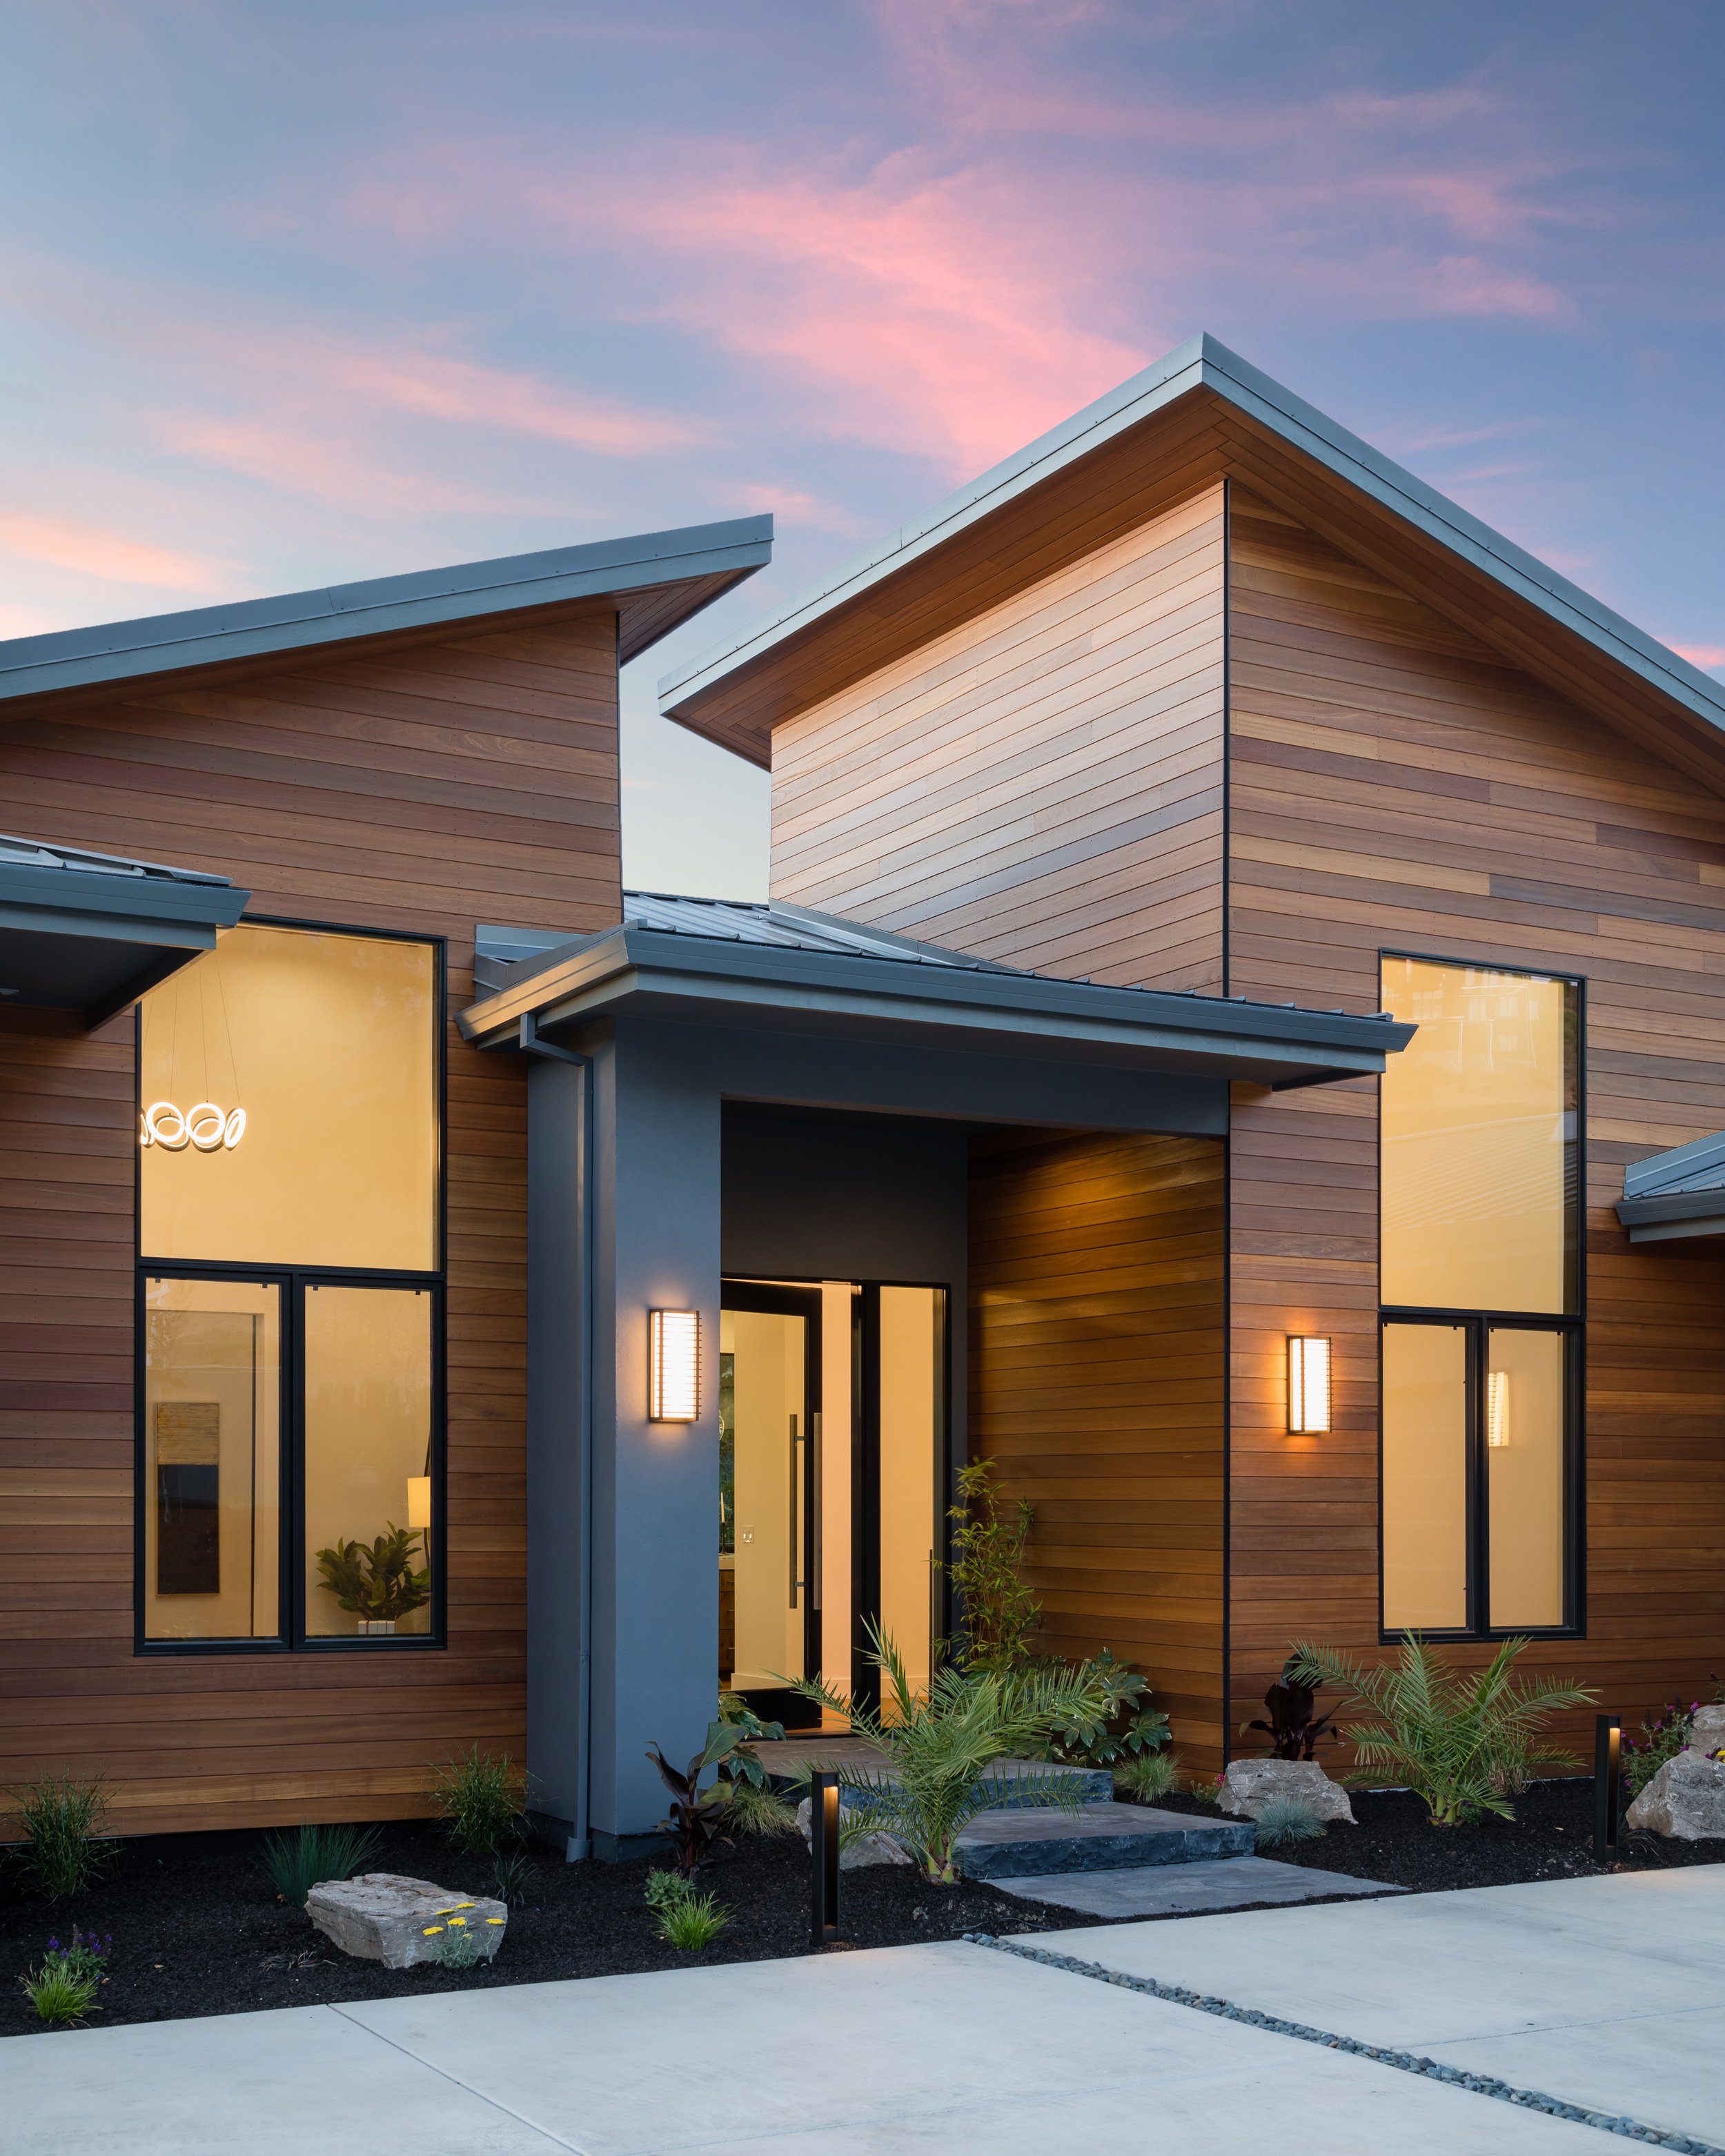 Santa Rosa, CA - Prodigy Real Estate Investments / PANACHE by Pezzolo Designs